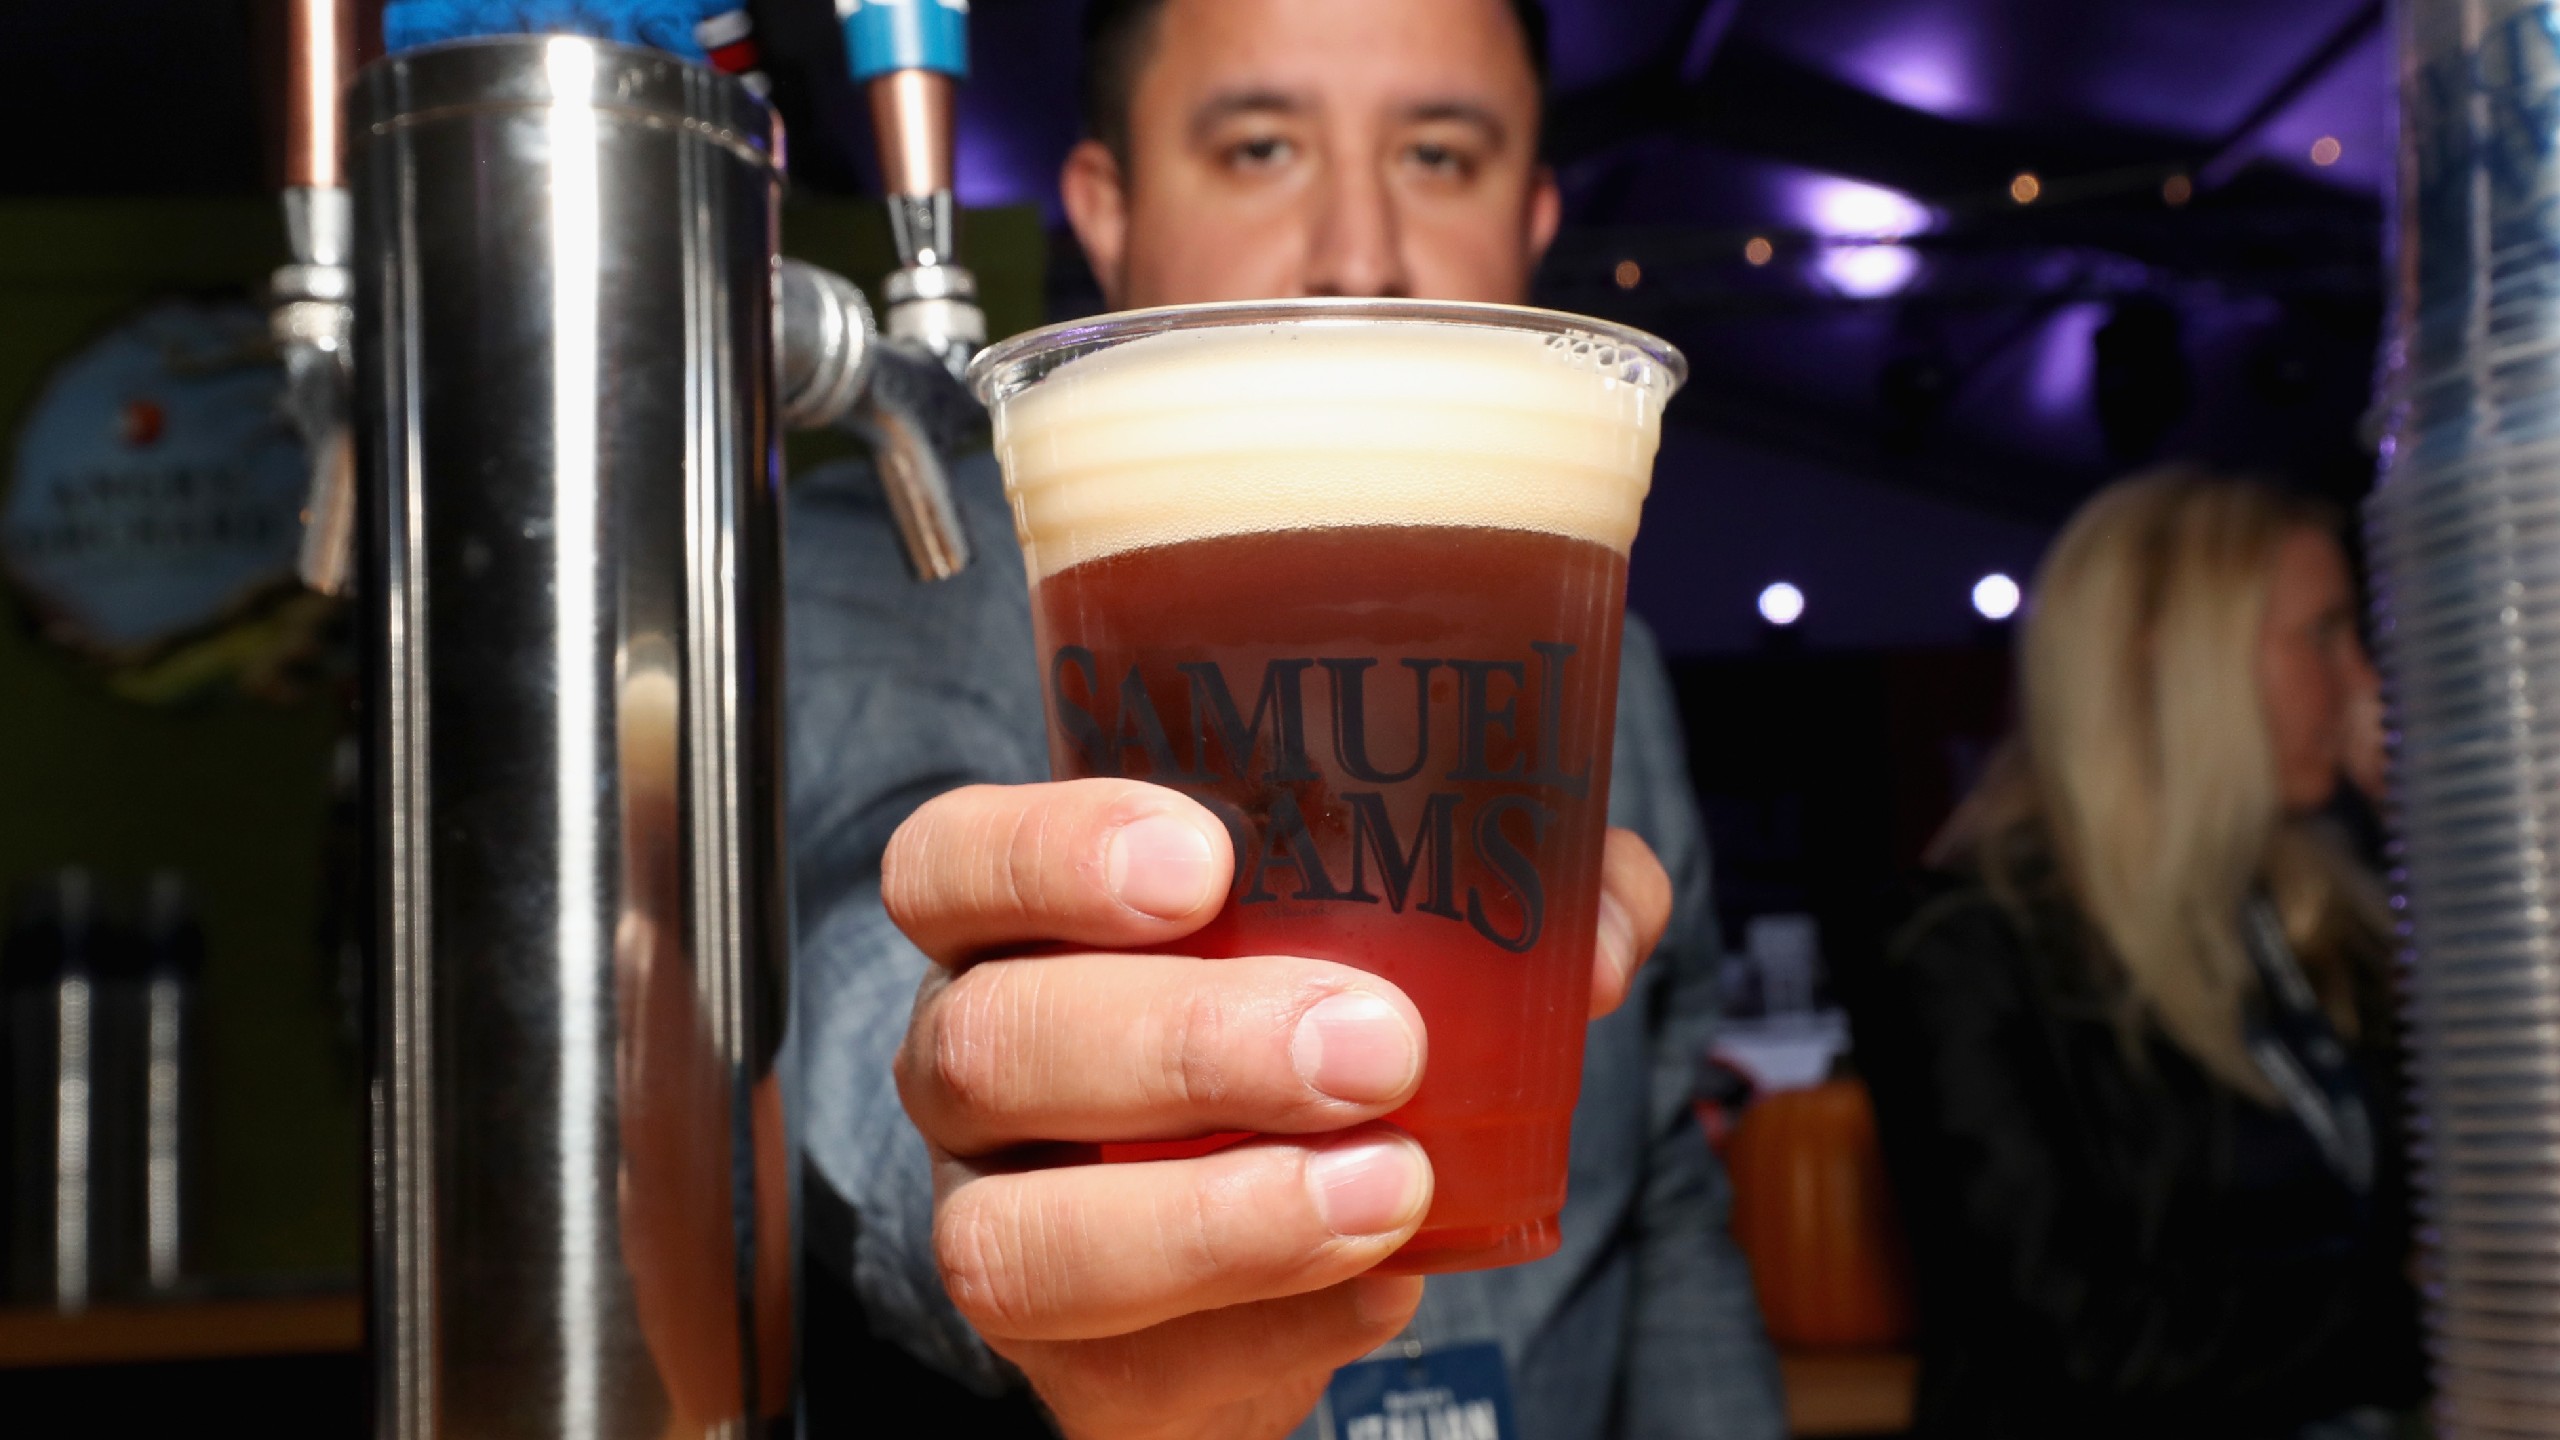 Samuel Adams releases 28% ABV beer illegal in 15 states